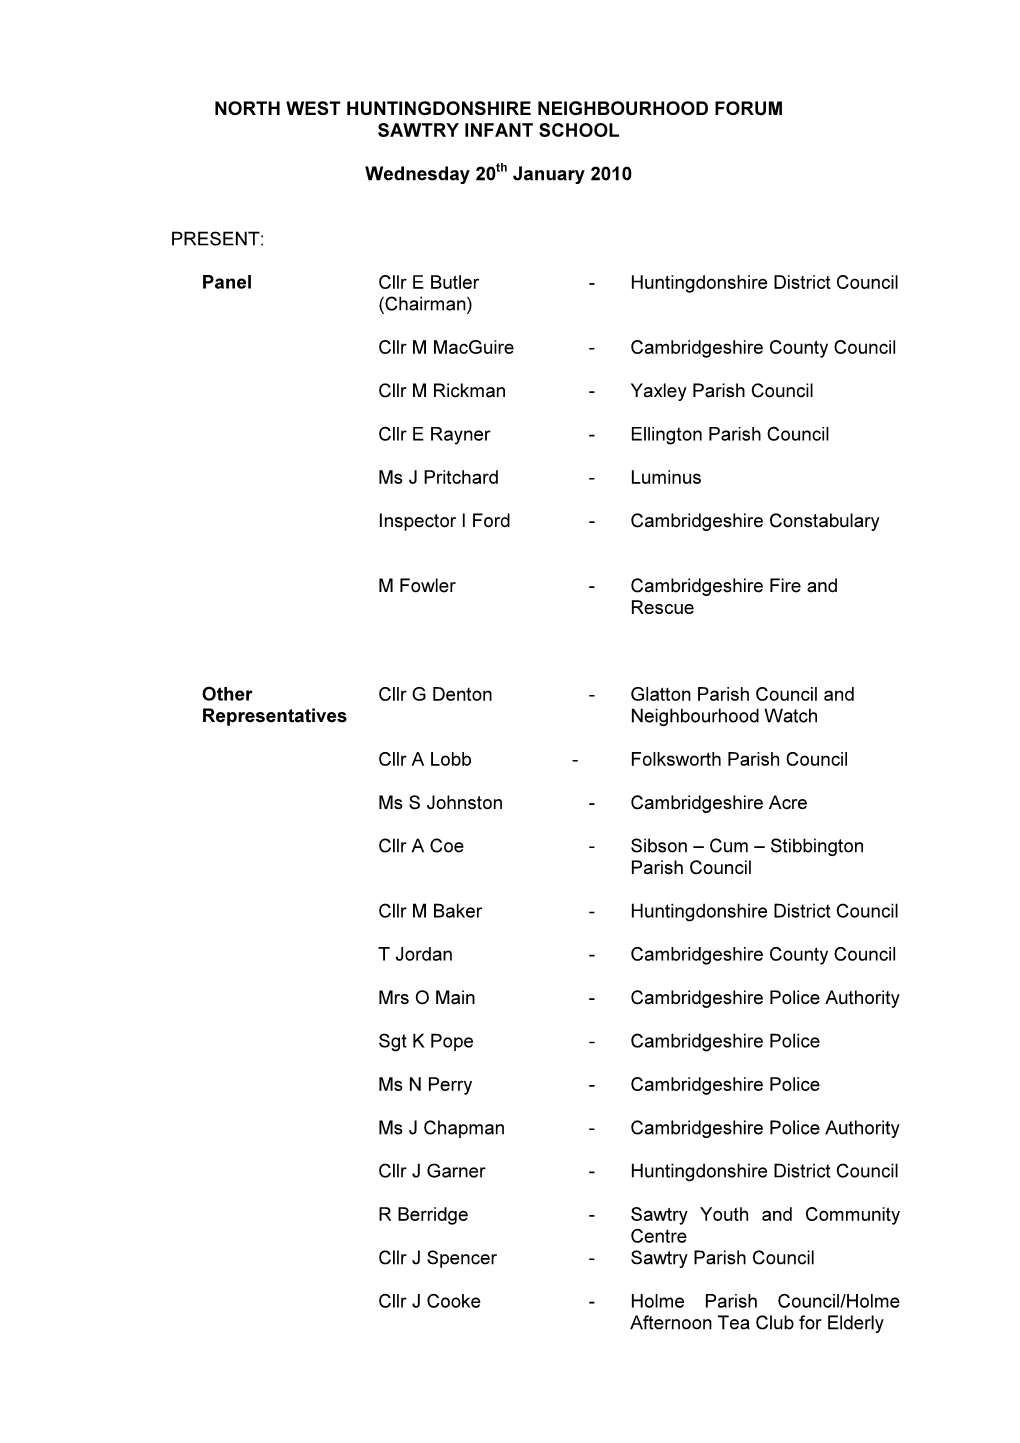 Panel Cllr E Butler - Huntingdonshire District Council (Chairman)